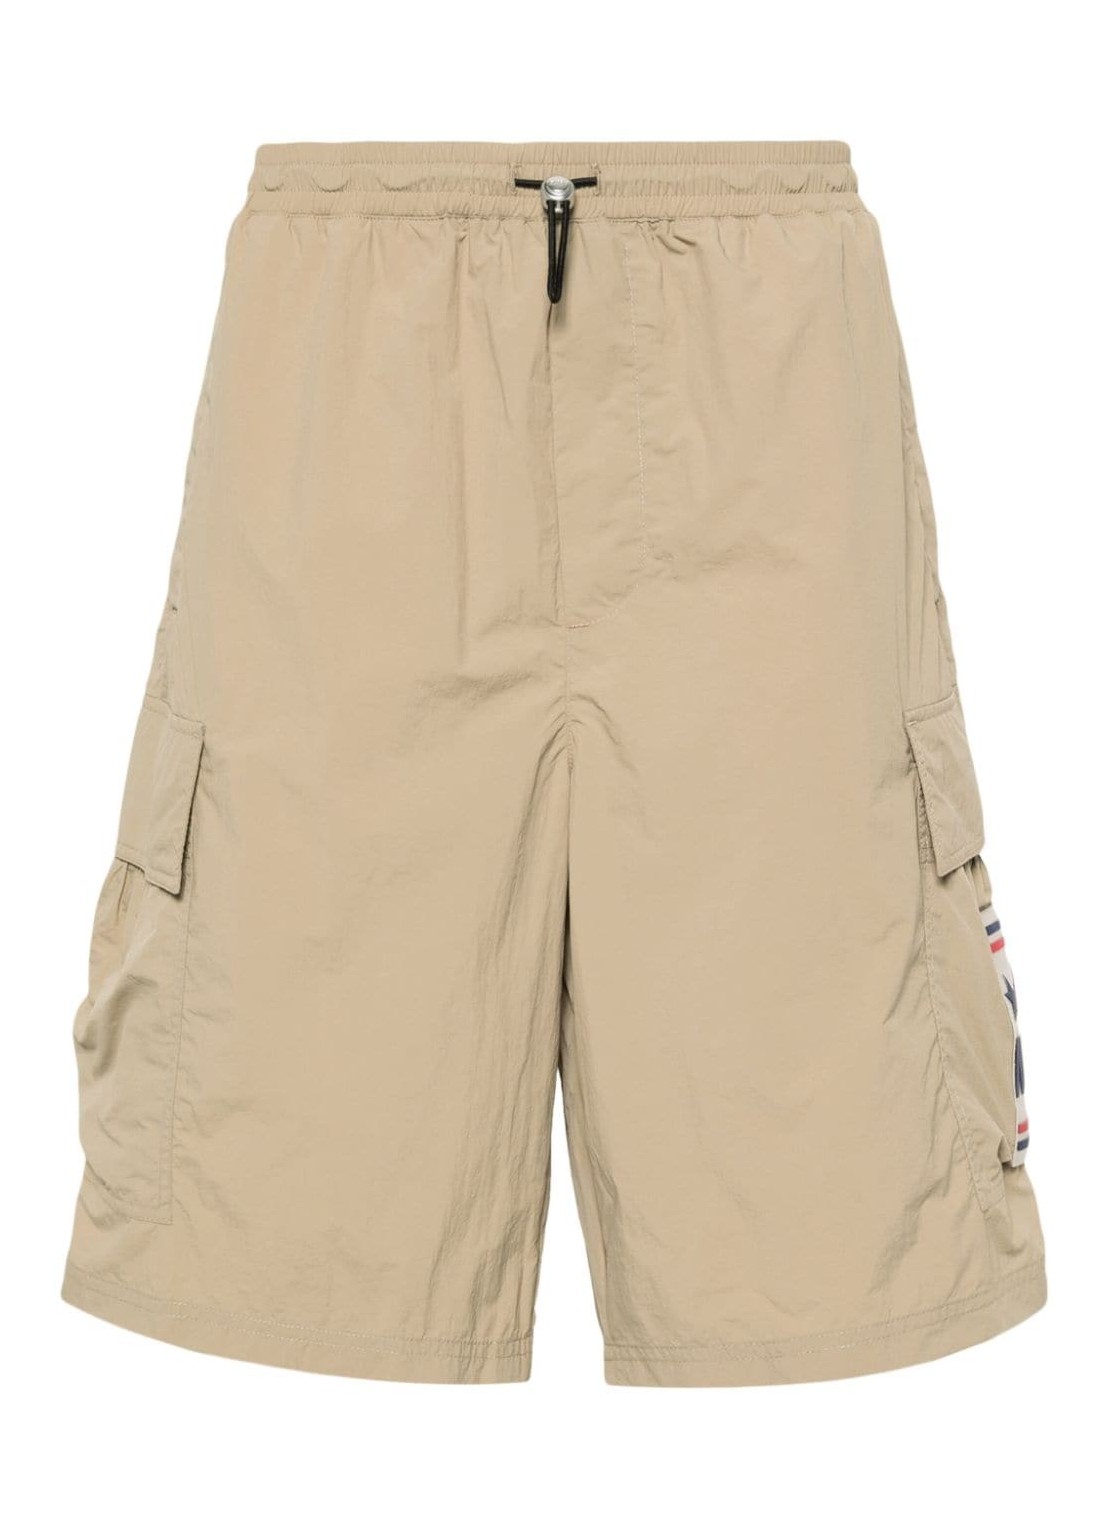 Pantalon corto autry short pant man shorts main man shpm552c 552c talla S
 